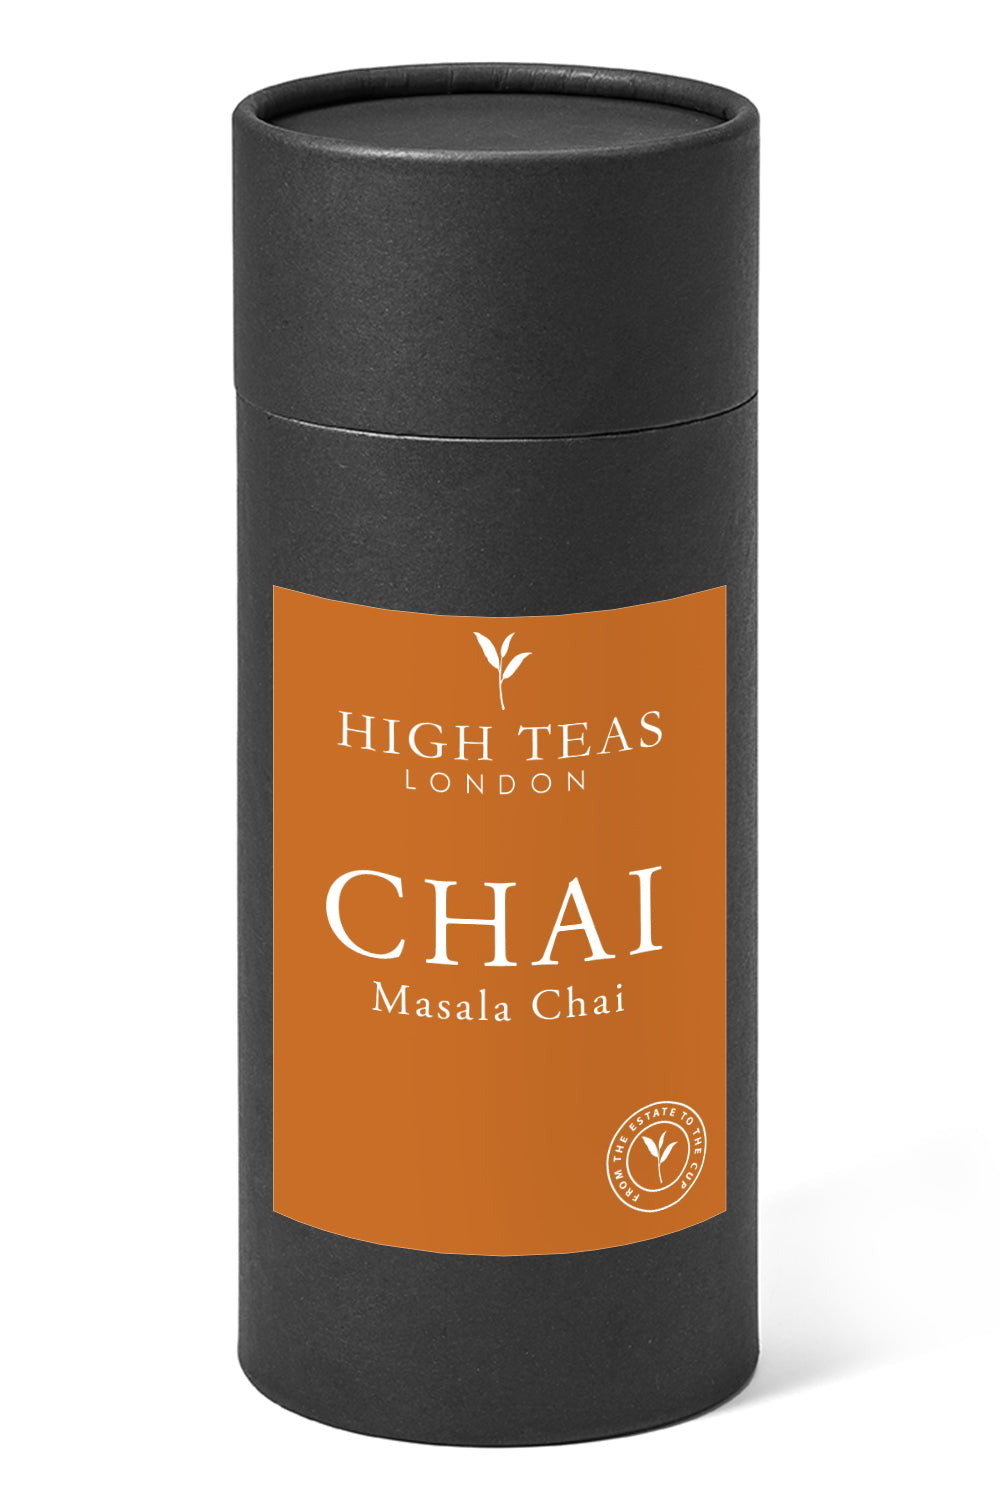 Masala Chai - The House Choice-150g gift-Loose Leaf Tea-High Teas